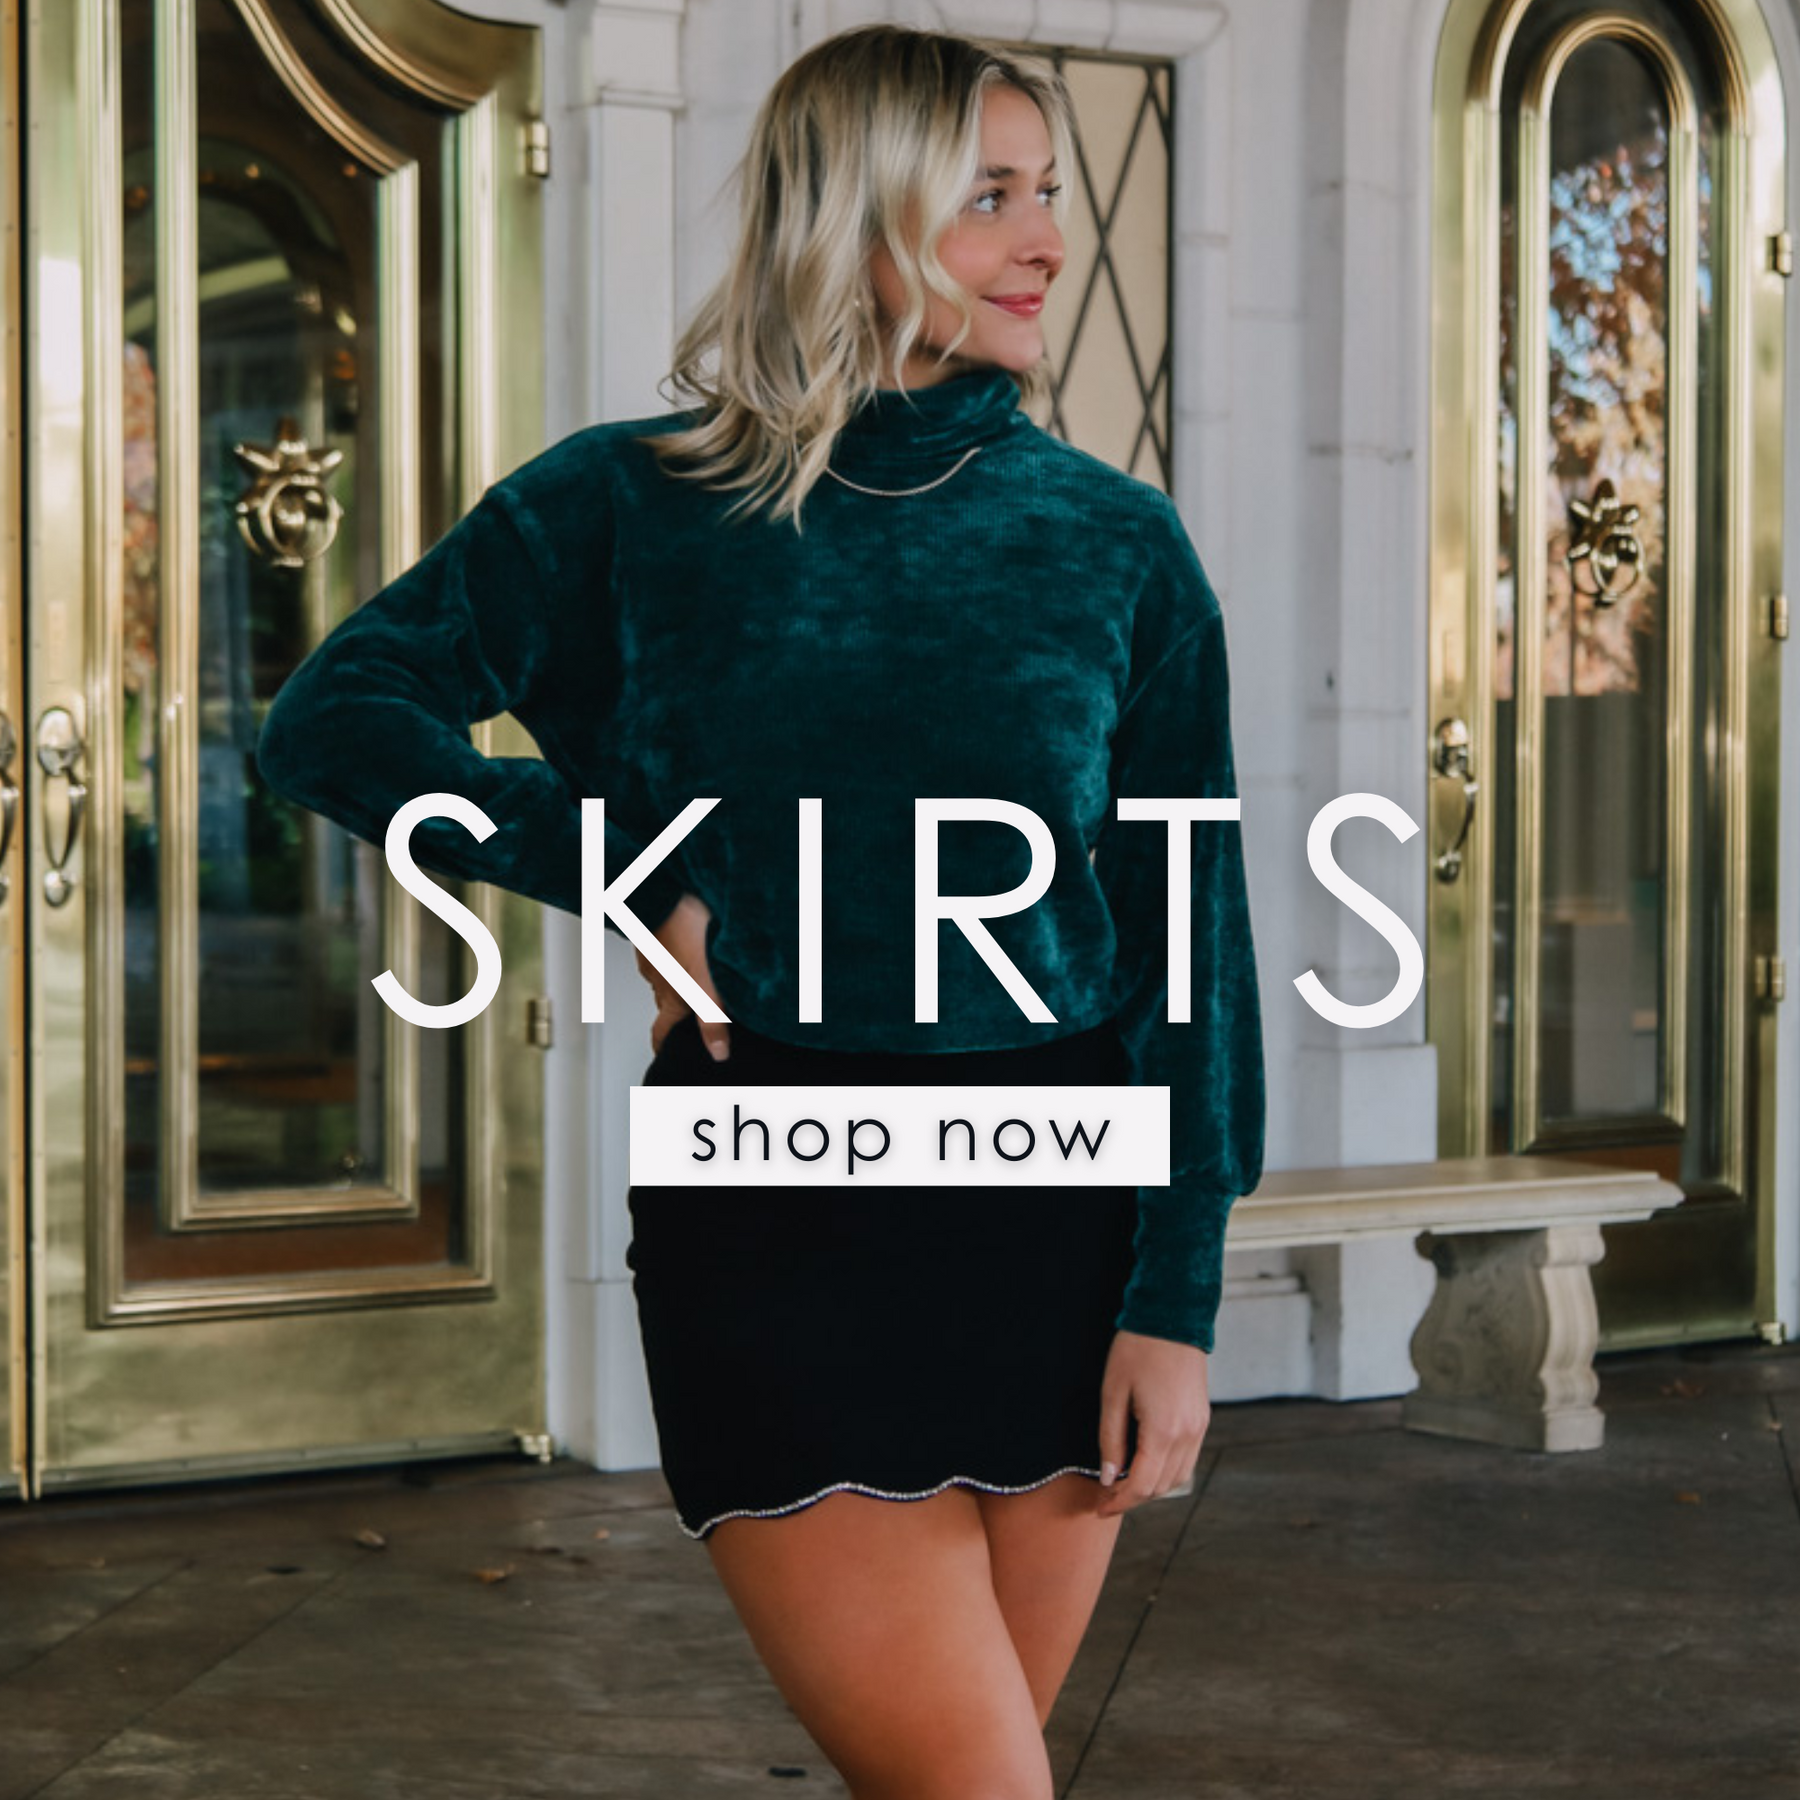 Trendy boutique skirts. Shop now!